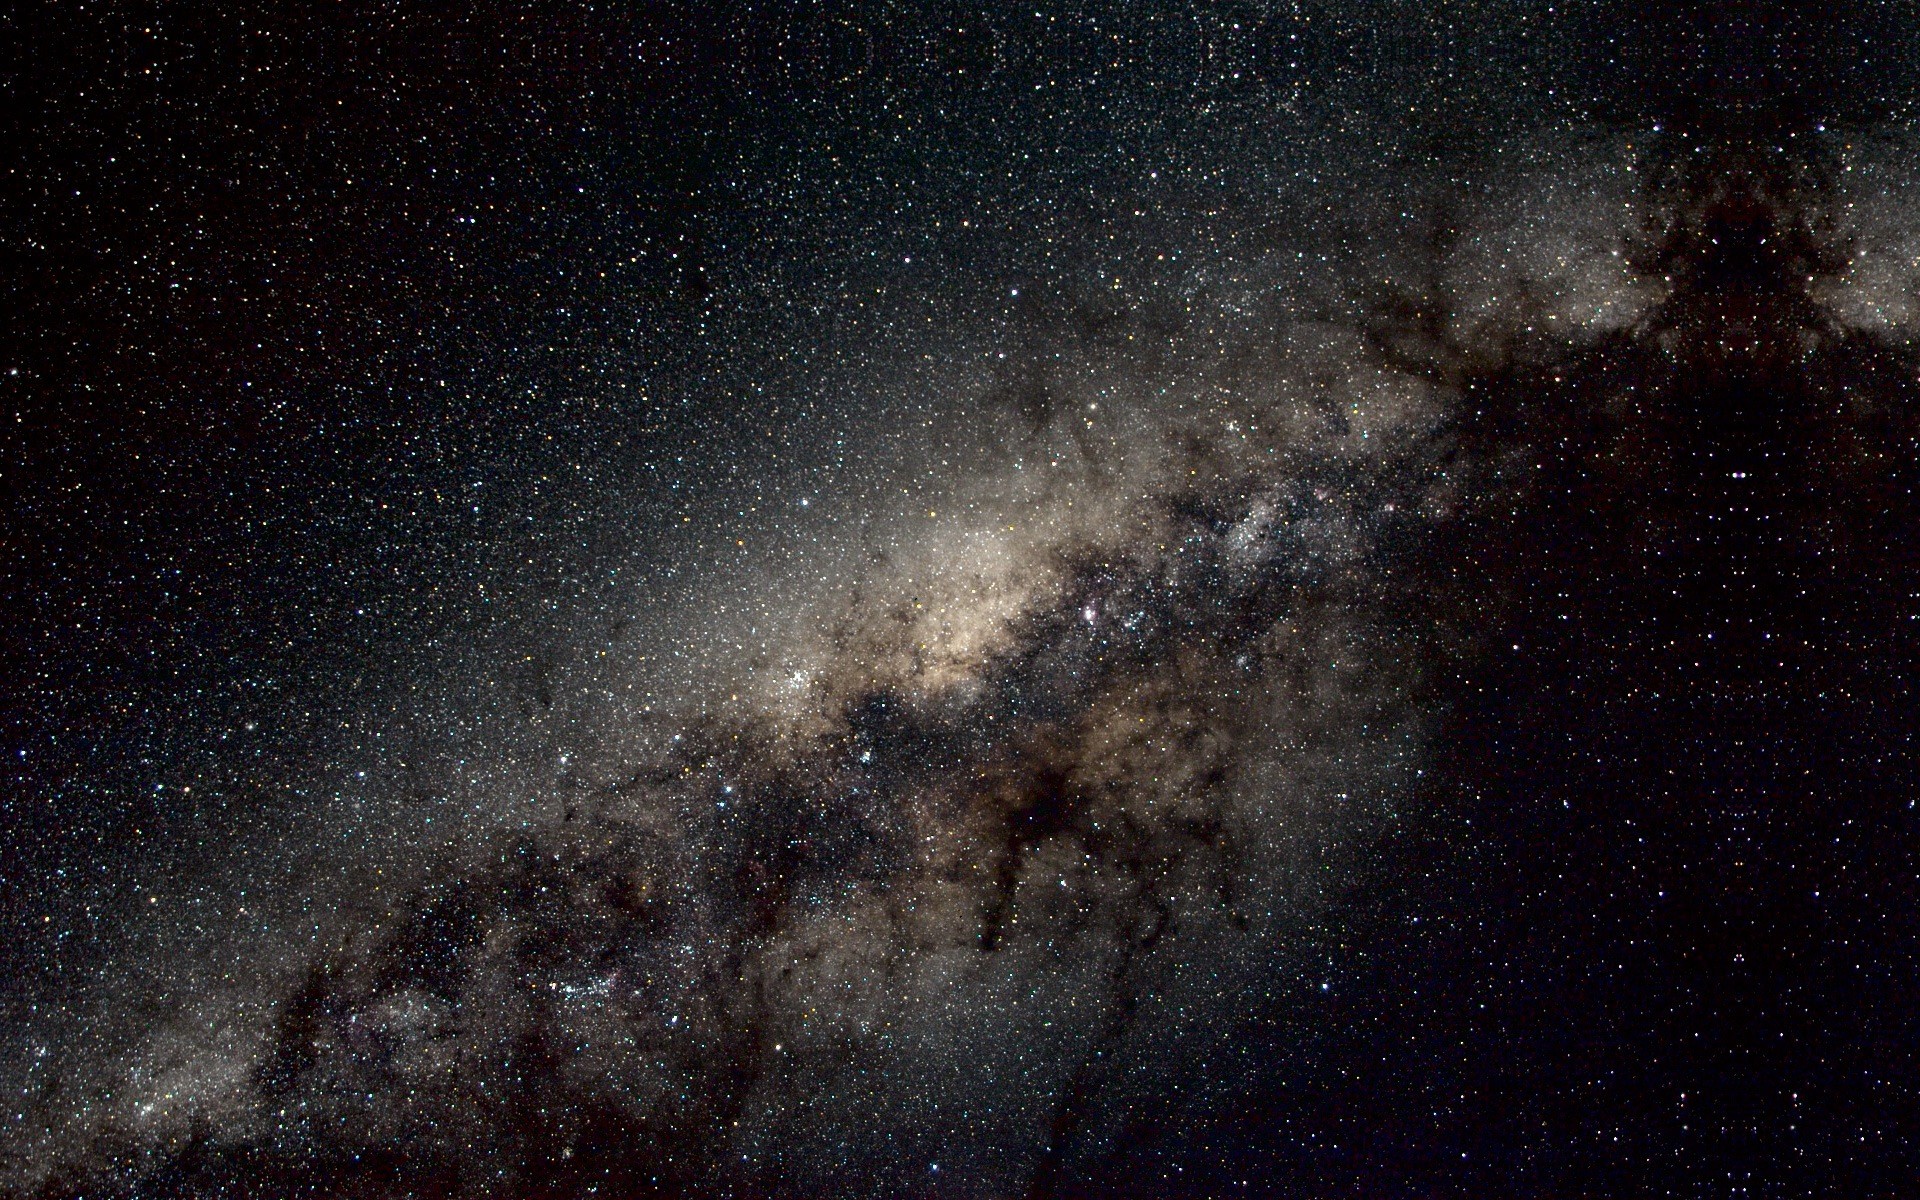 [39+] Milky Way Galaxy Wallpaper HD | WallpaperSafari.com